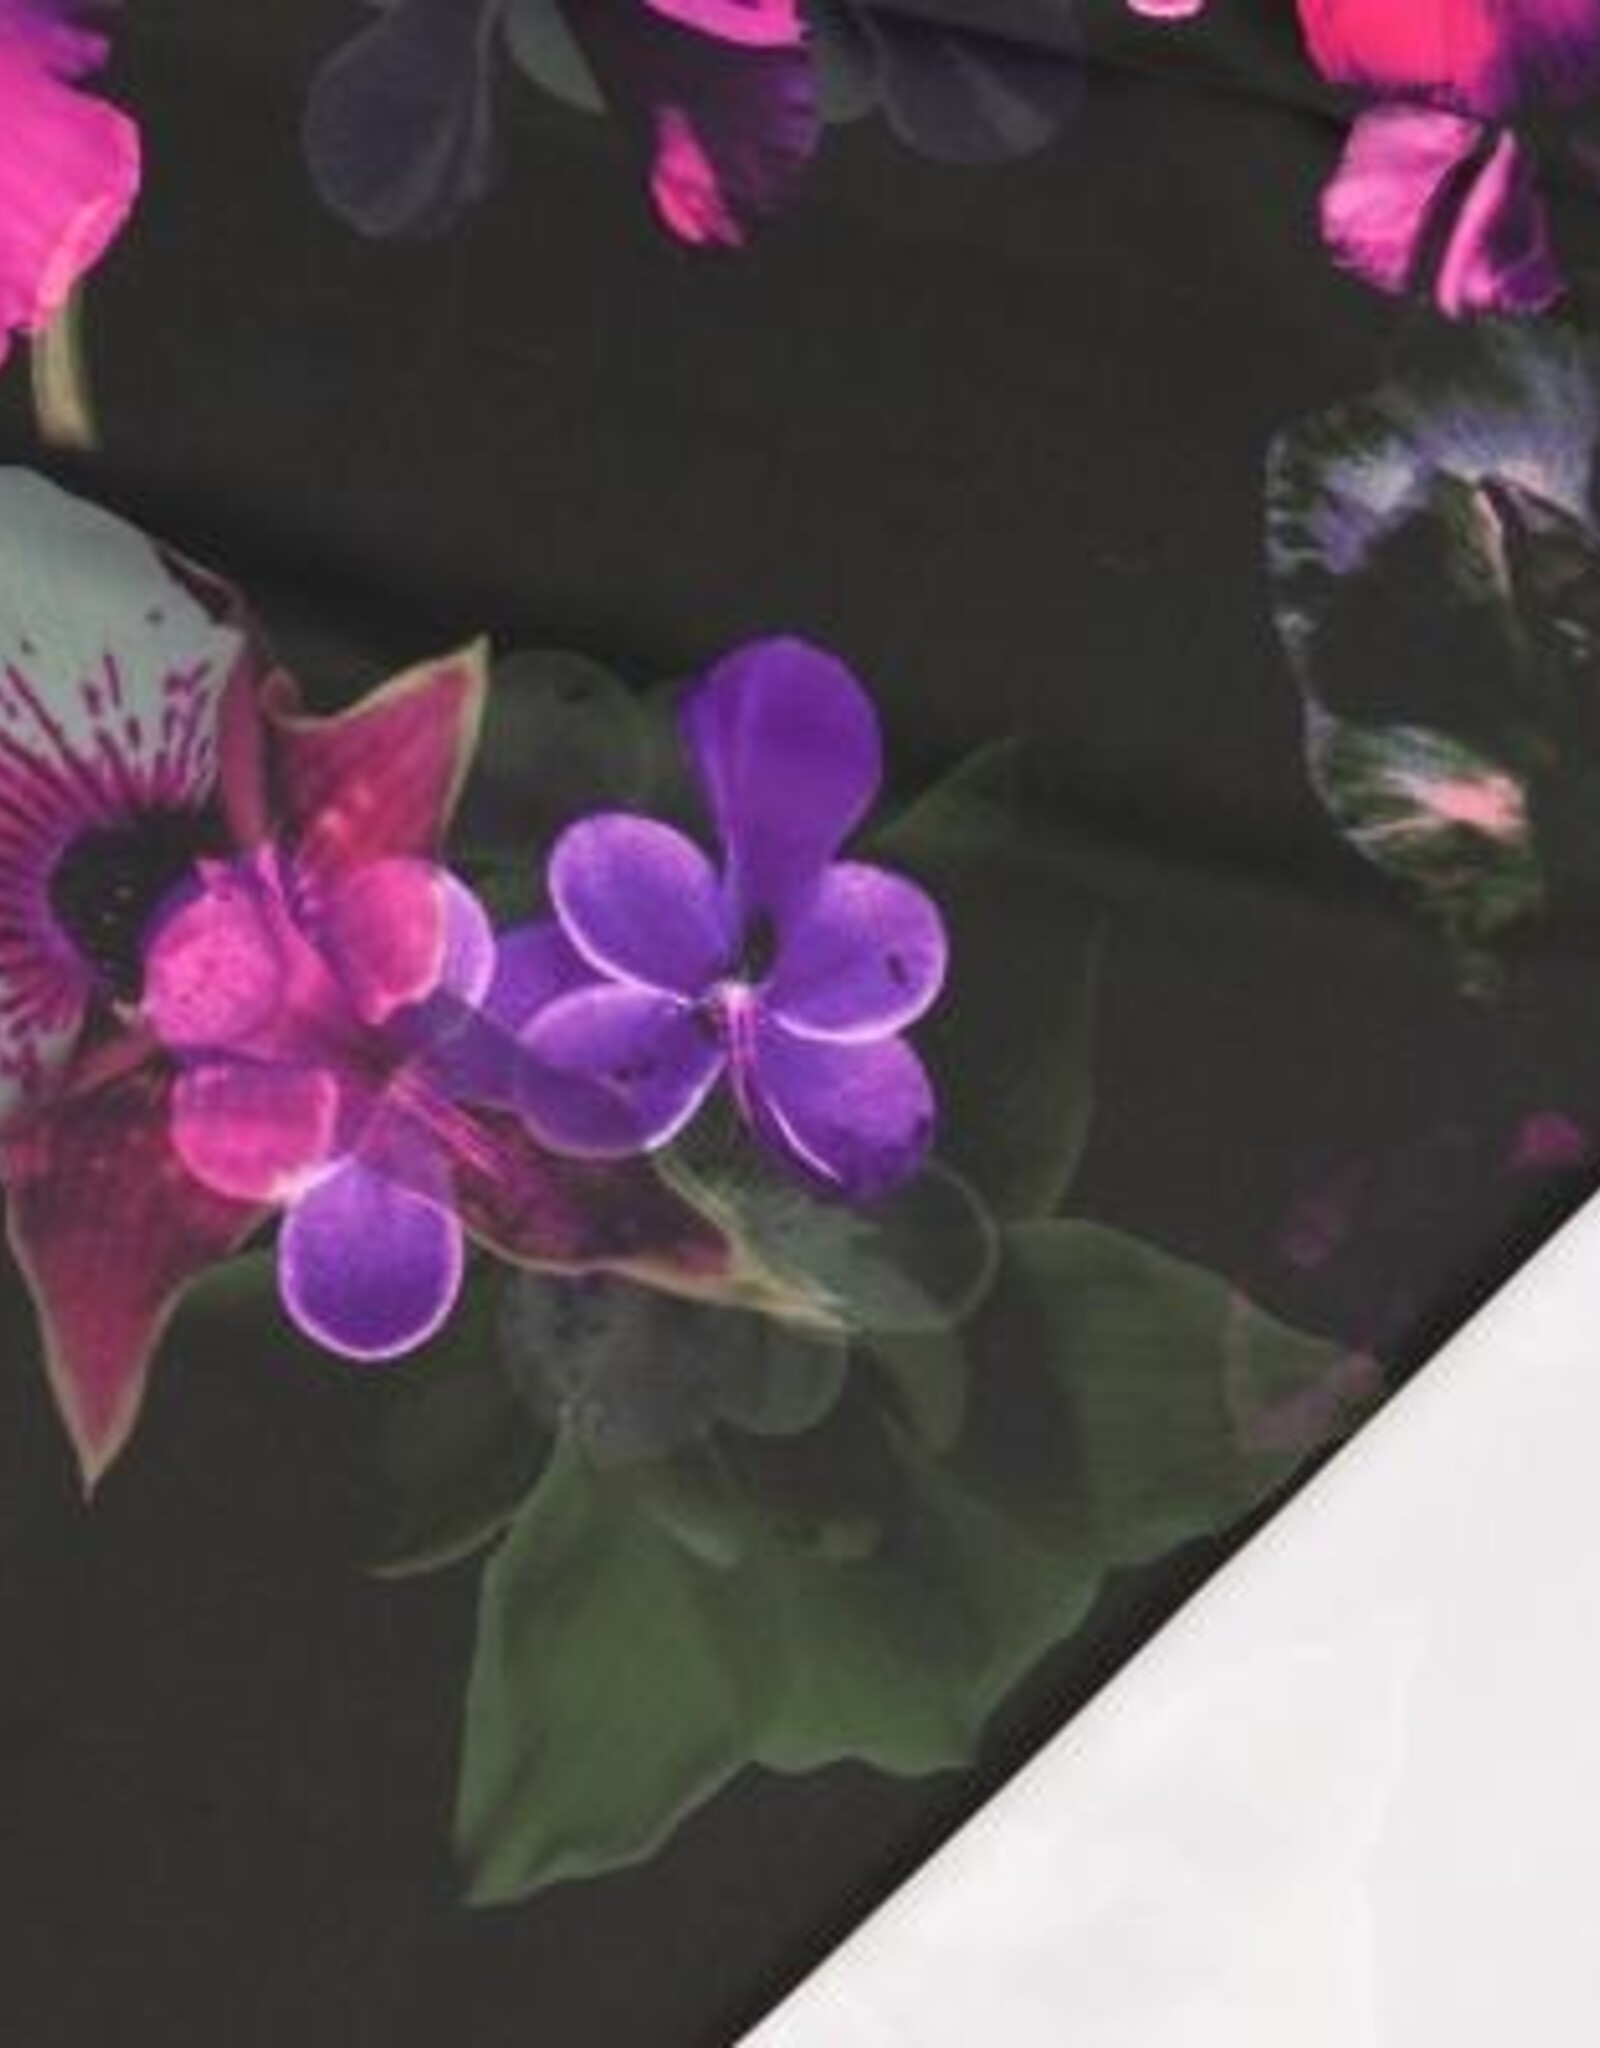 Stoffenschuur selectie Soft touch travel satinlook orchideeën zwart/paars